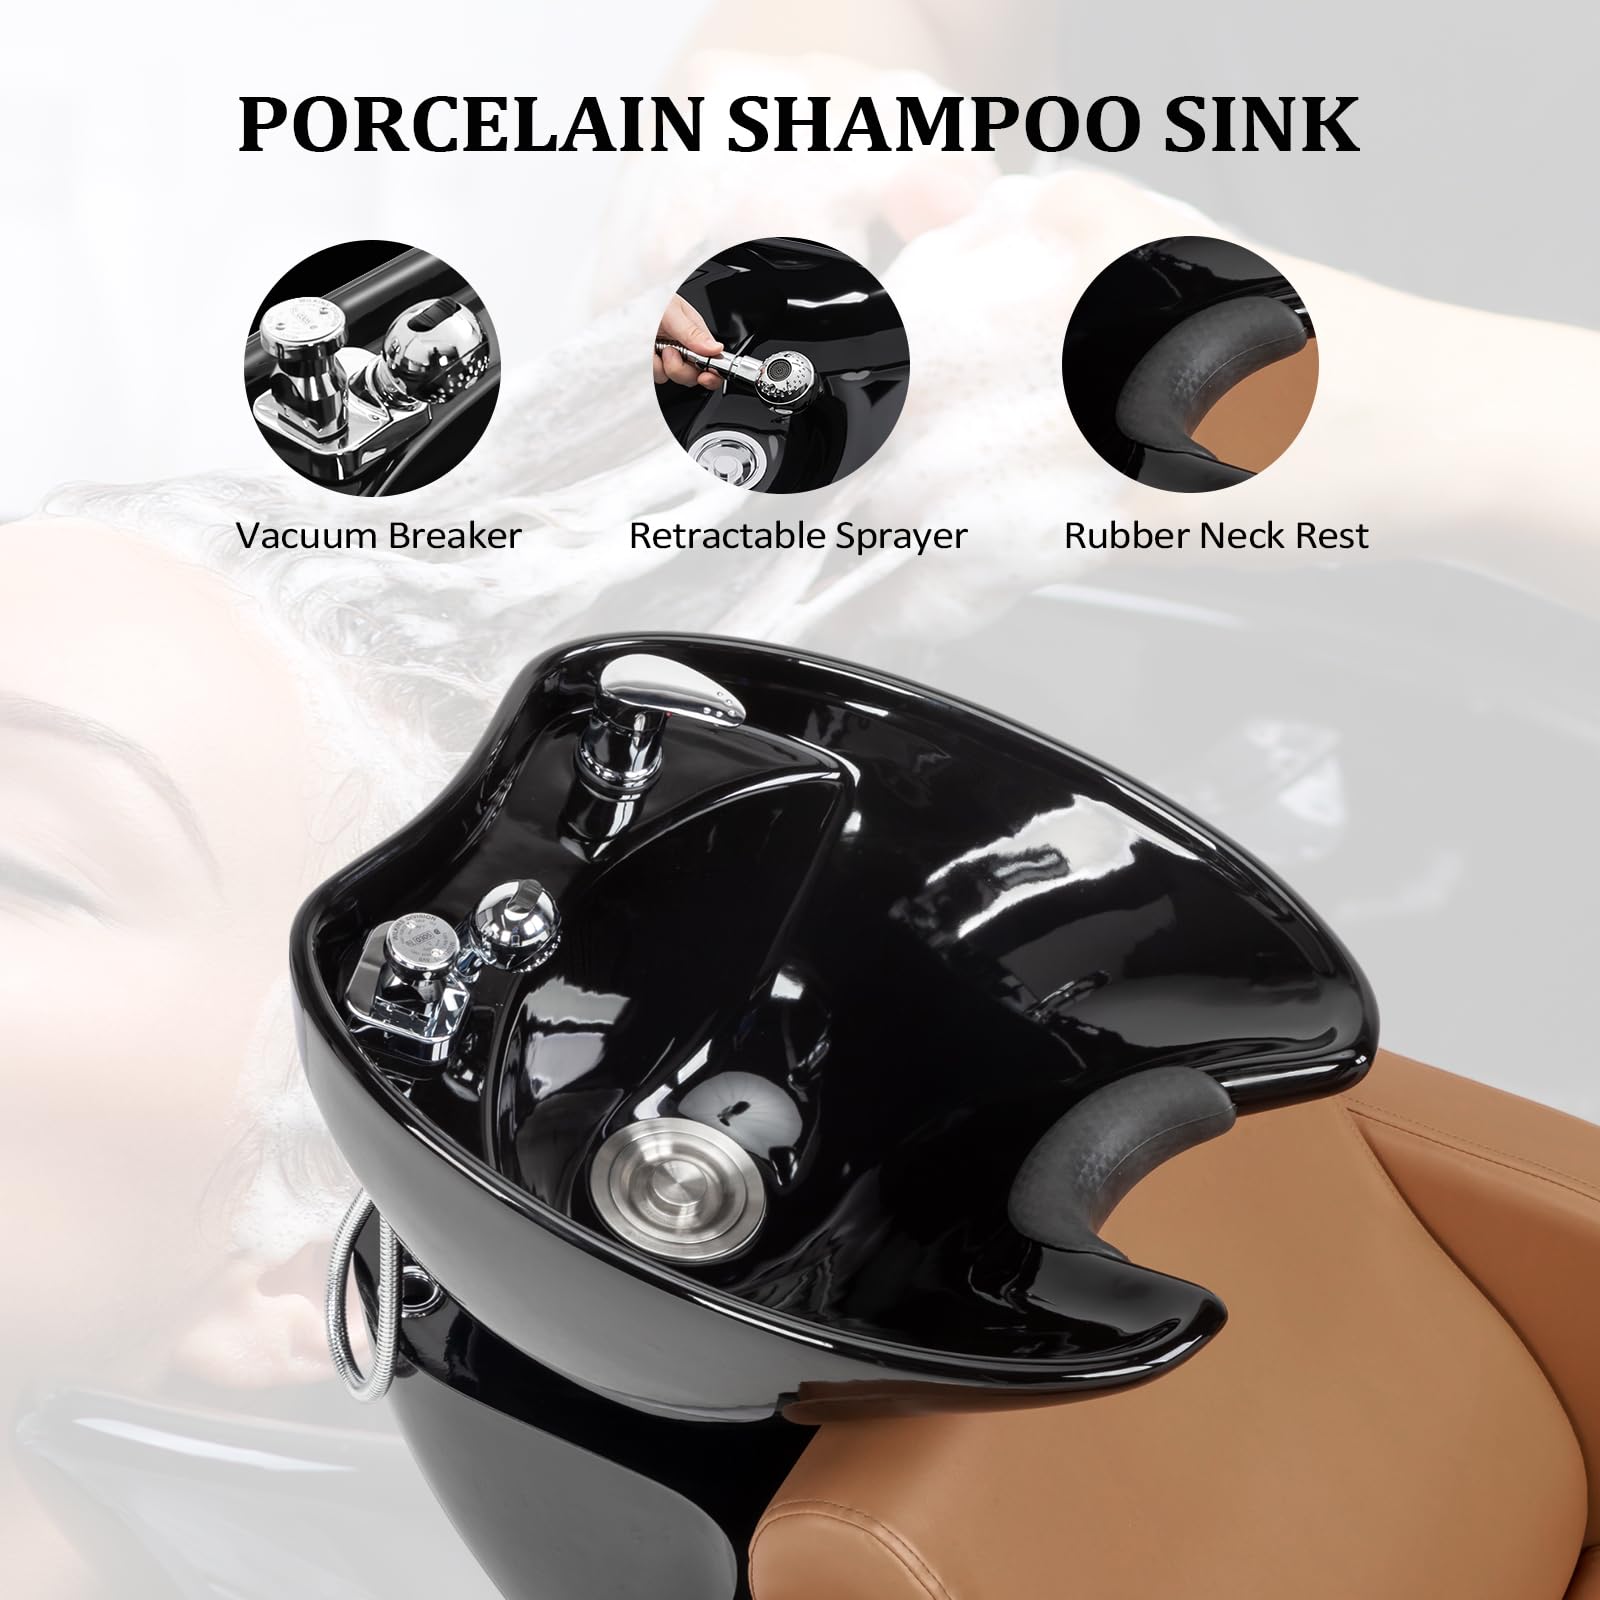 OmySalon Salon Shampoo Bowl and Chair Shampoo Unit with Extra Wide Seat & Porcelain Hair Washing Sink Black/Camel